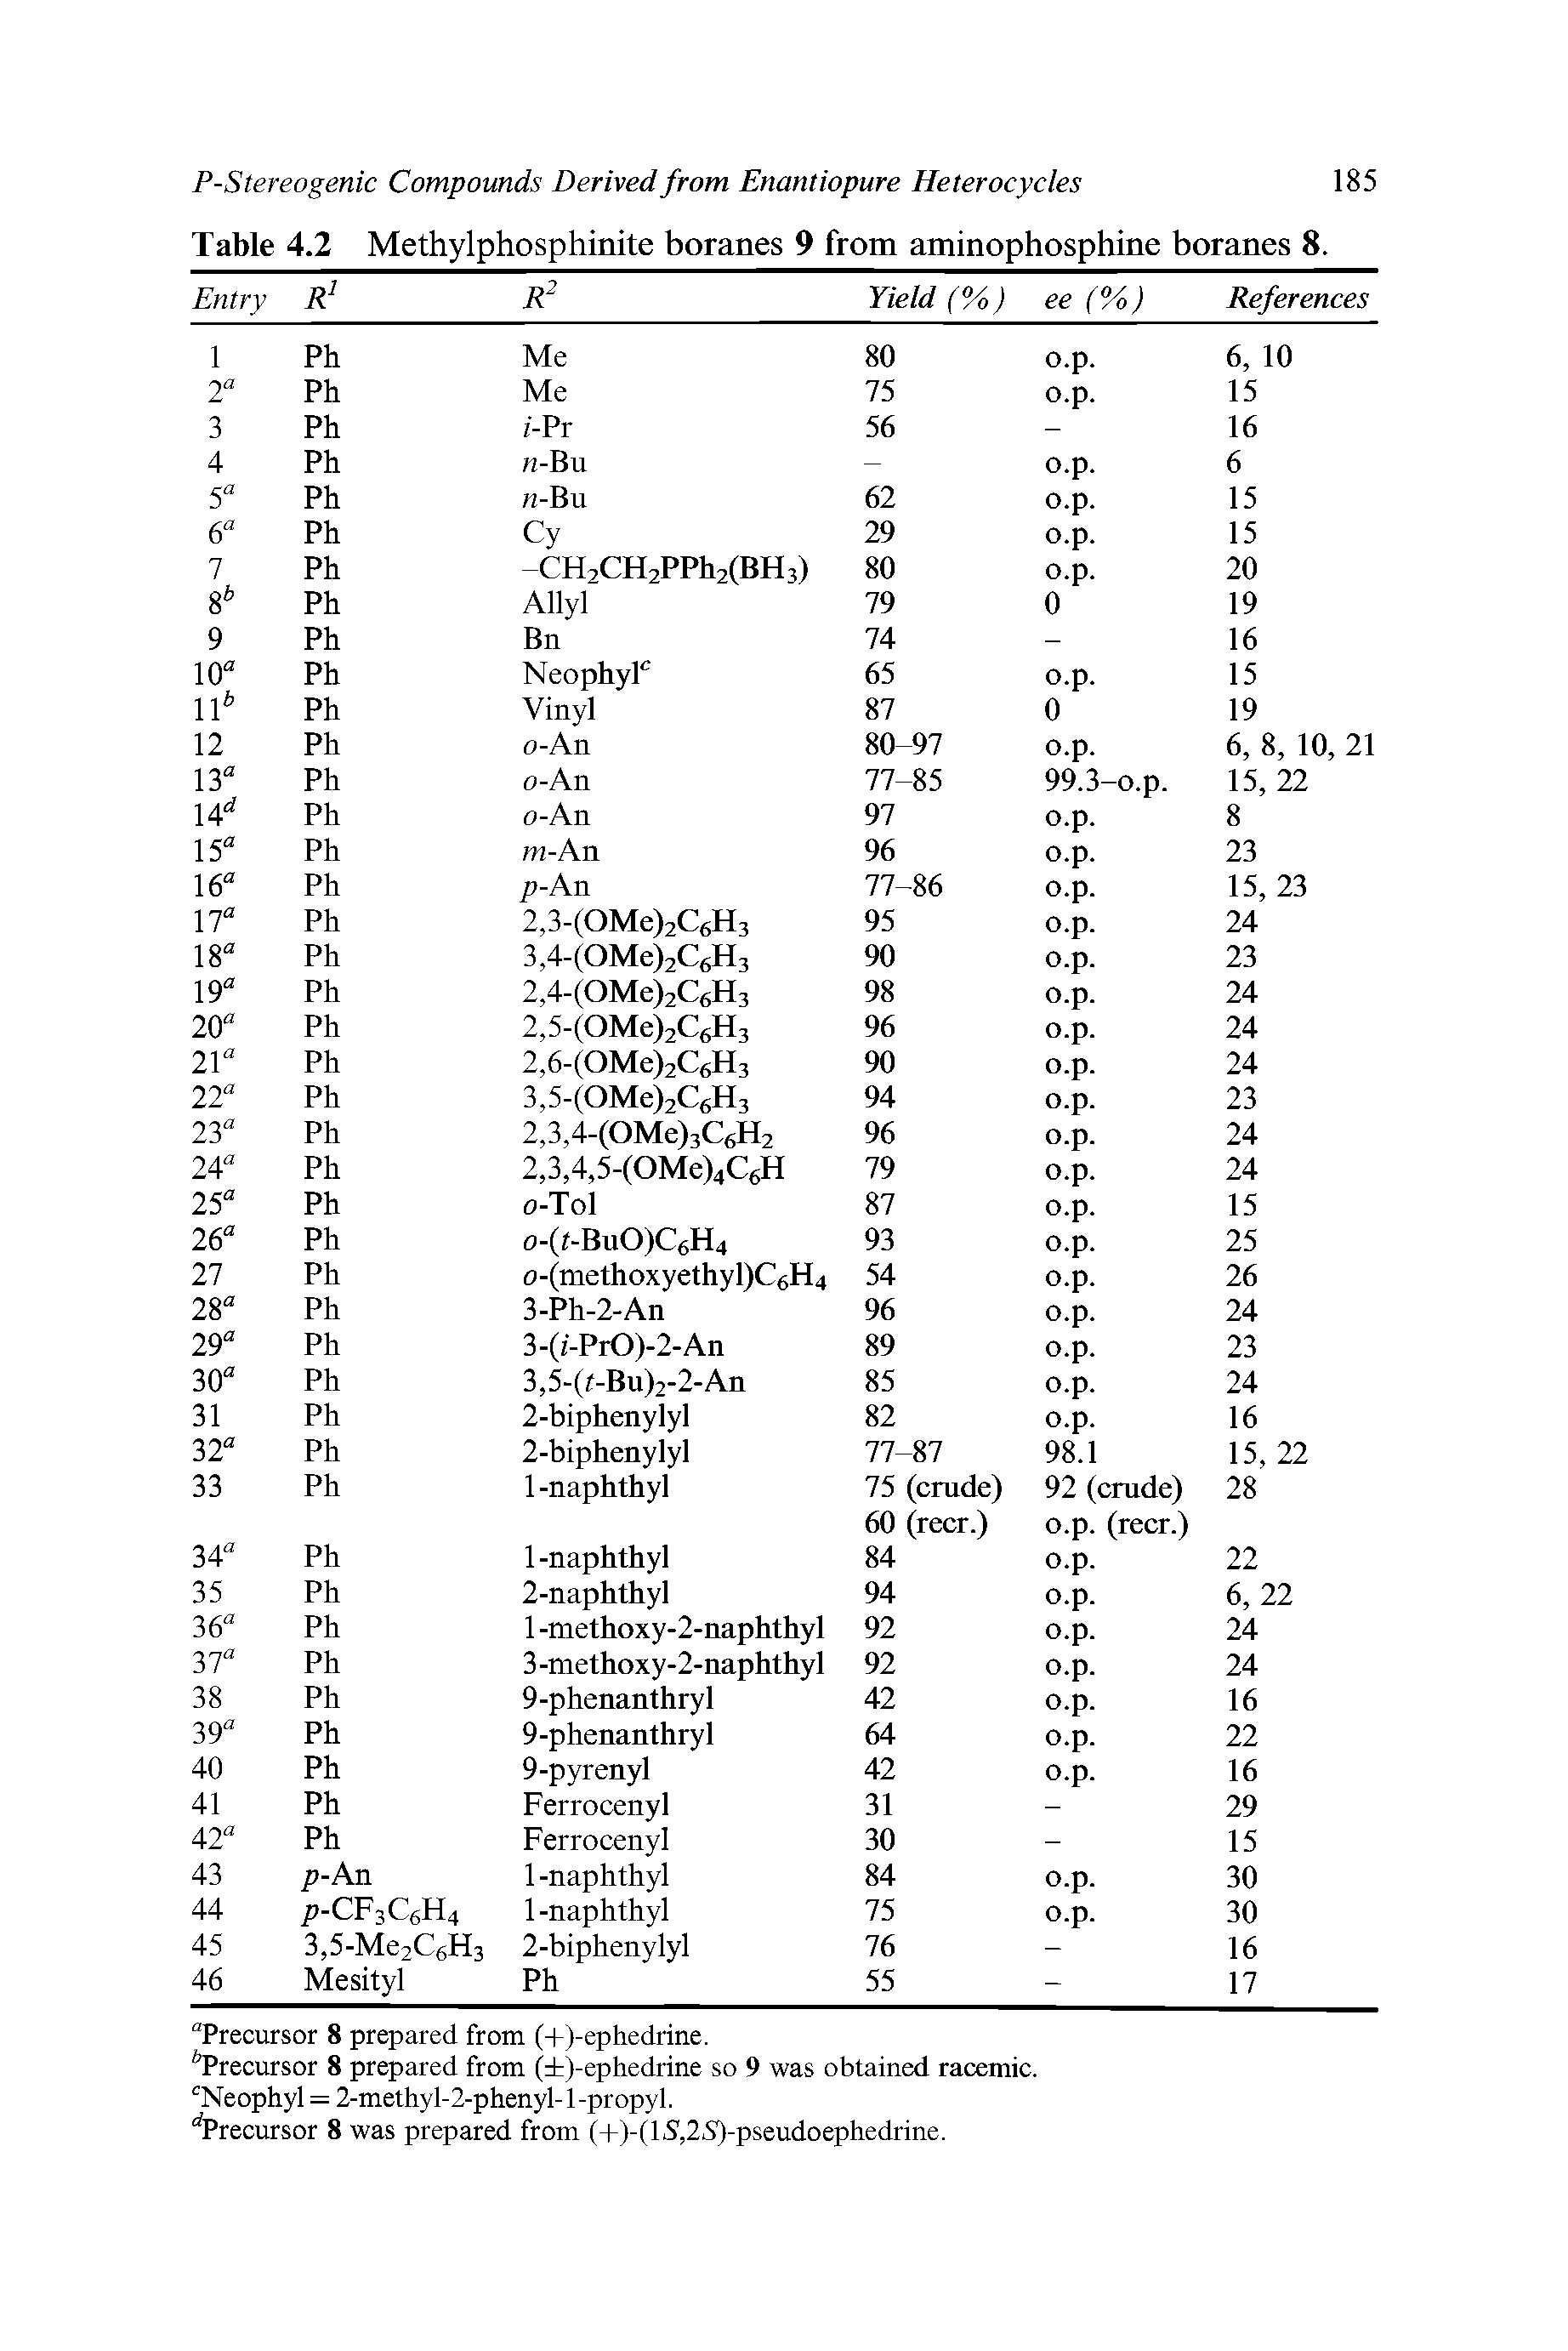 Table 4.2 Methylphosphinite boranes 9 from aminophosphine boranes 8.